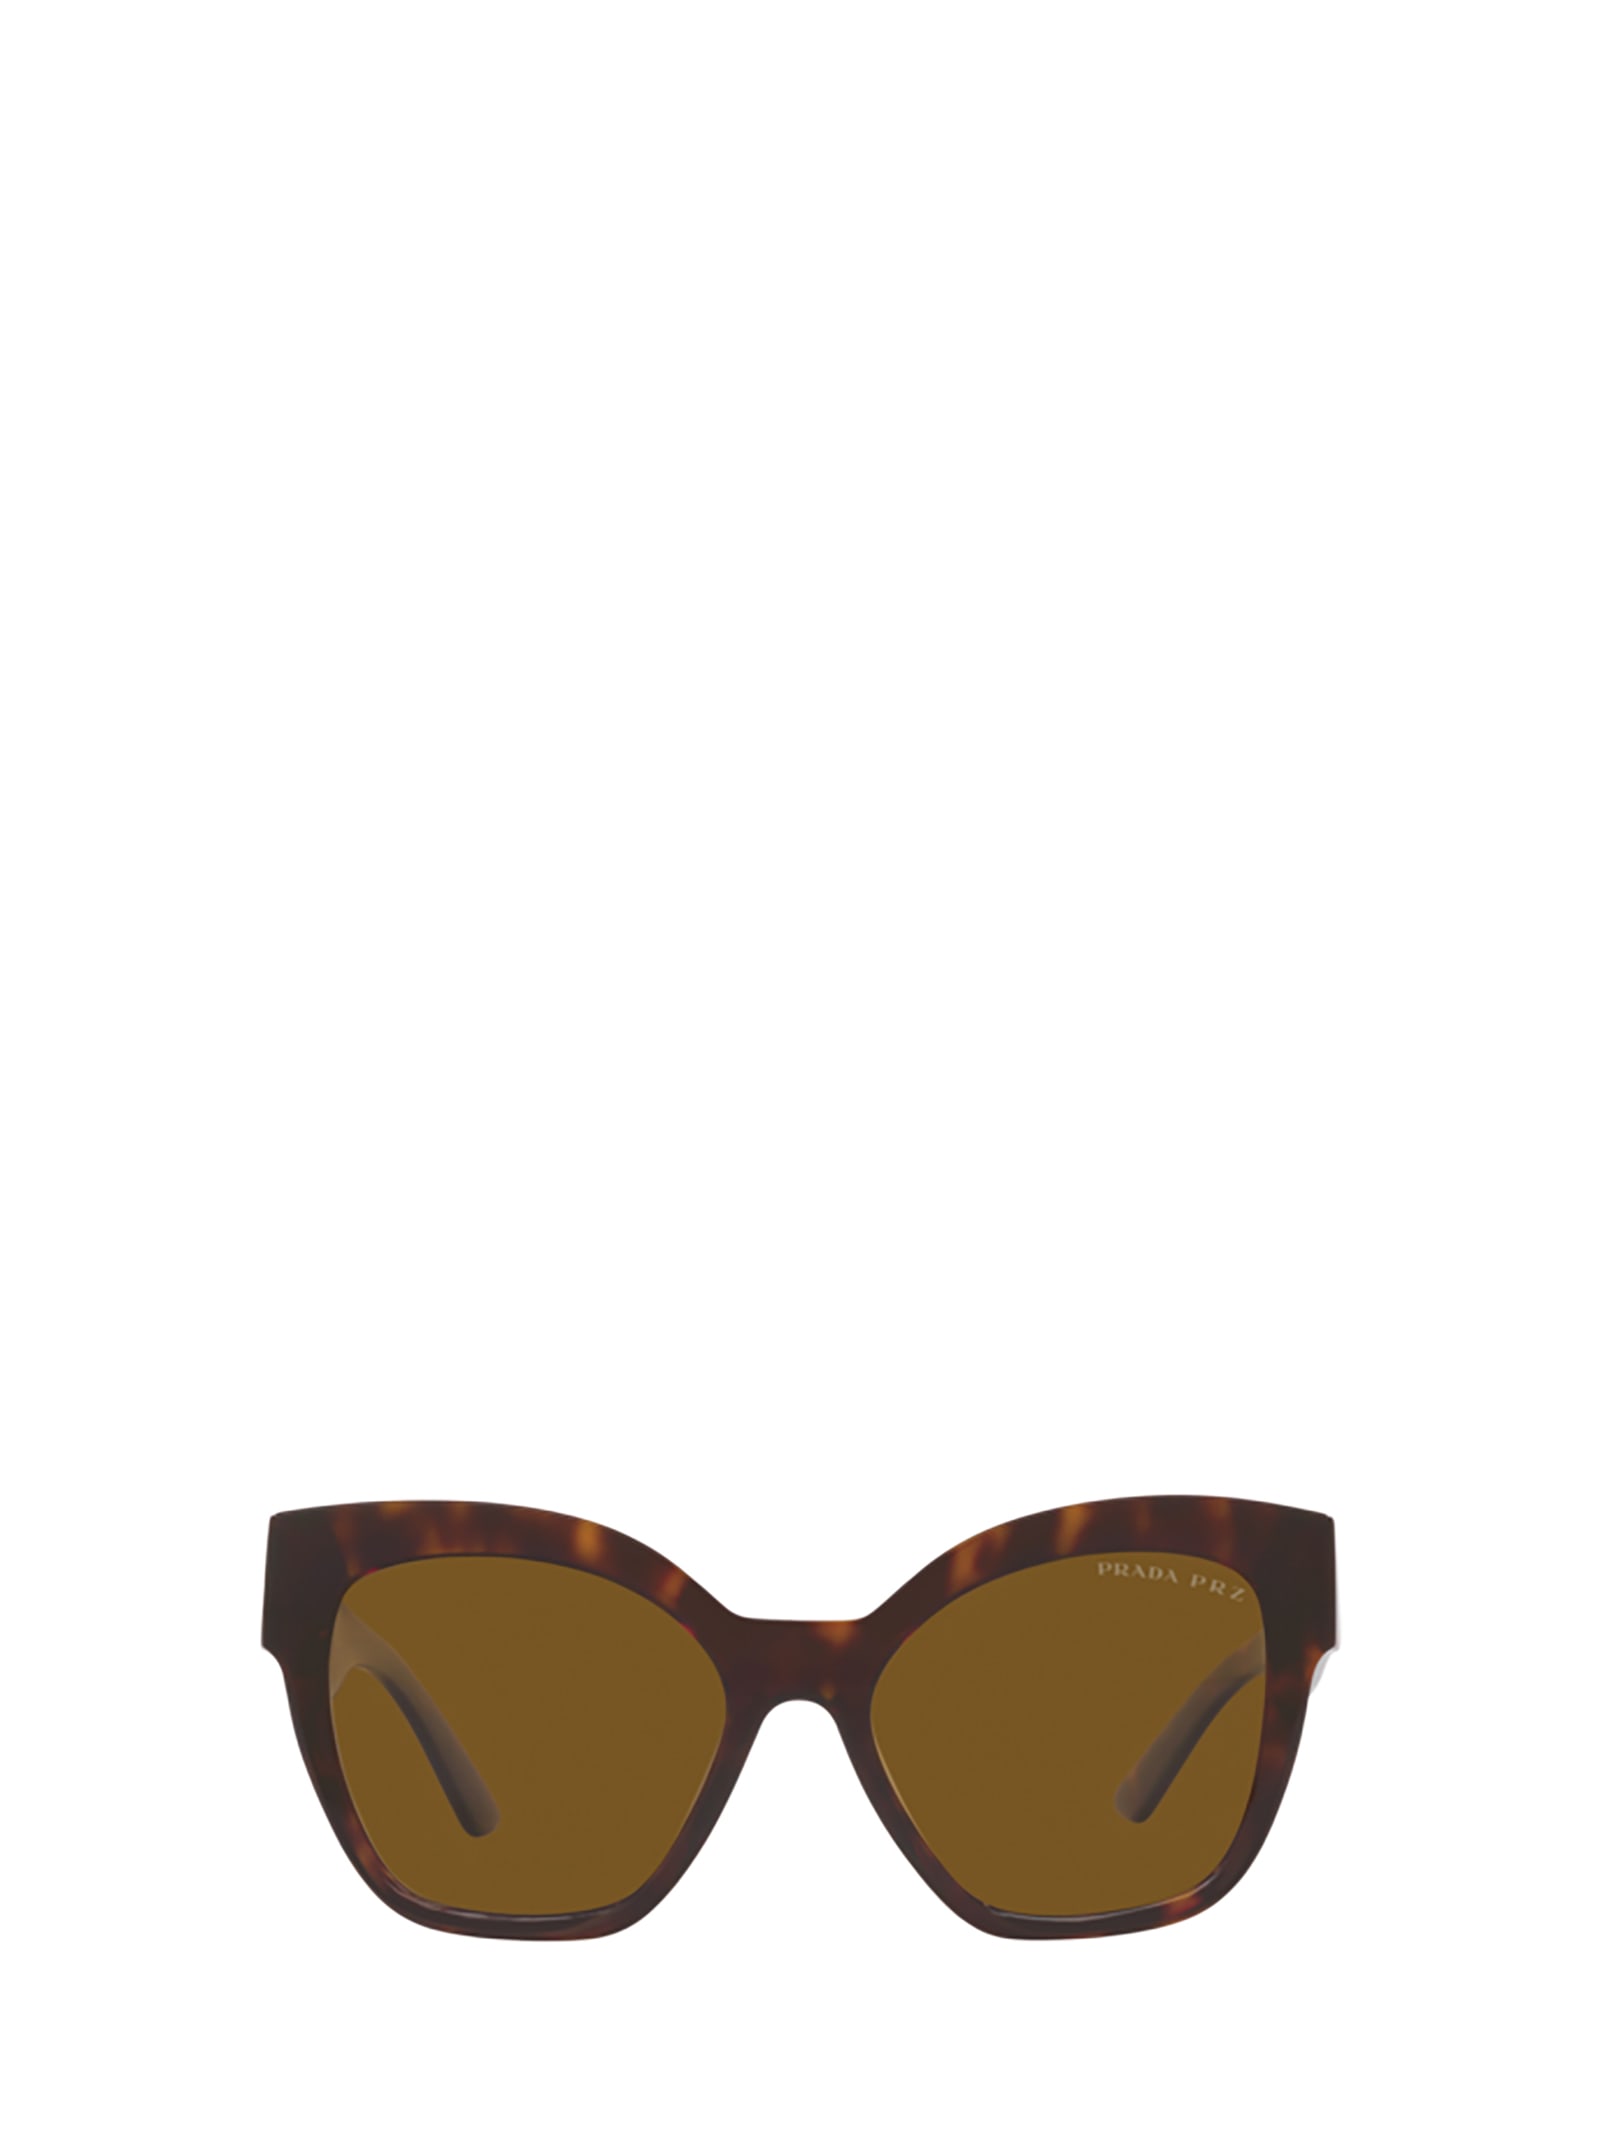 Prada Eyewear Pr 17zs Tortoise Sunglasses